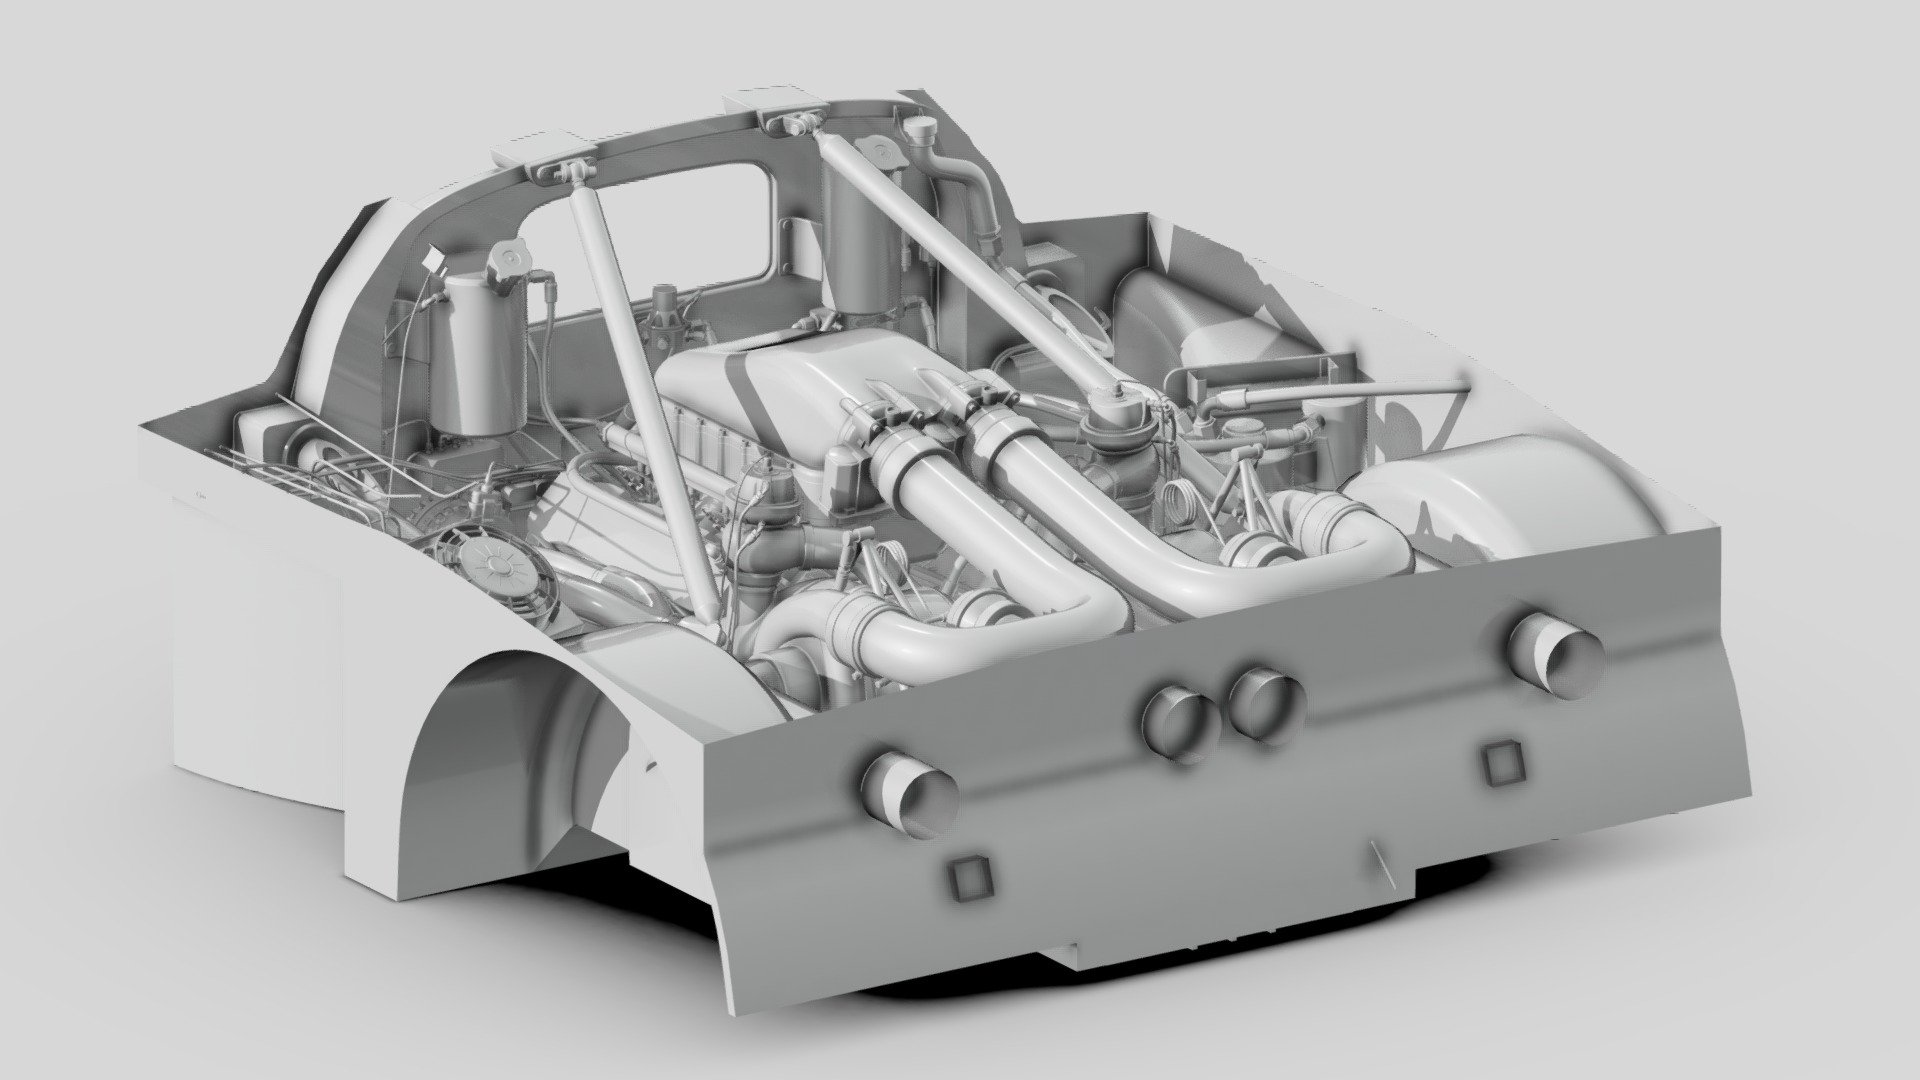 Just test upload for Second Life, Test engine - Engine Test F5 #2 - 3D model by AITETECH 3d model